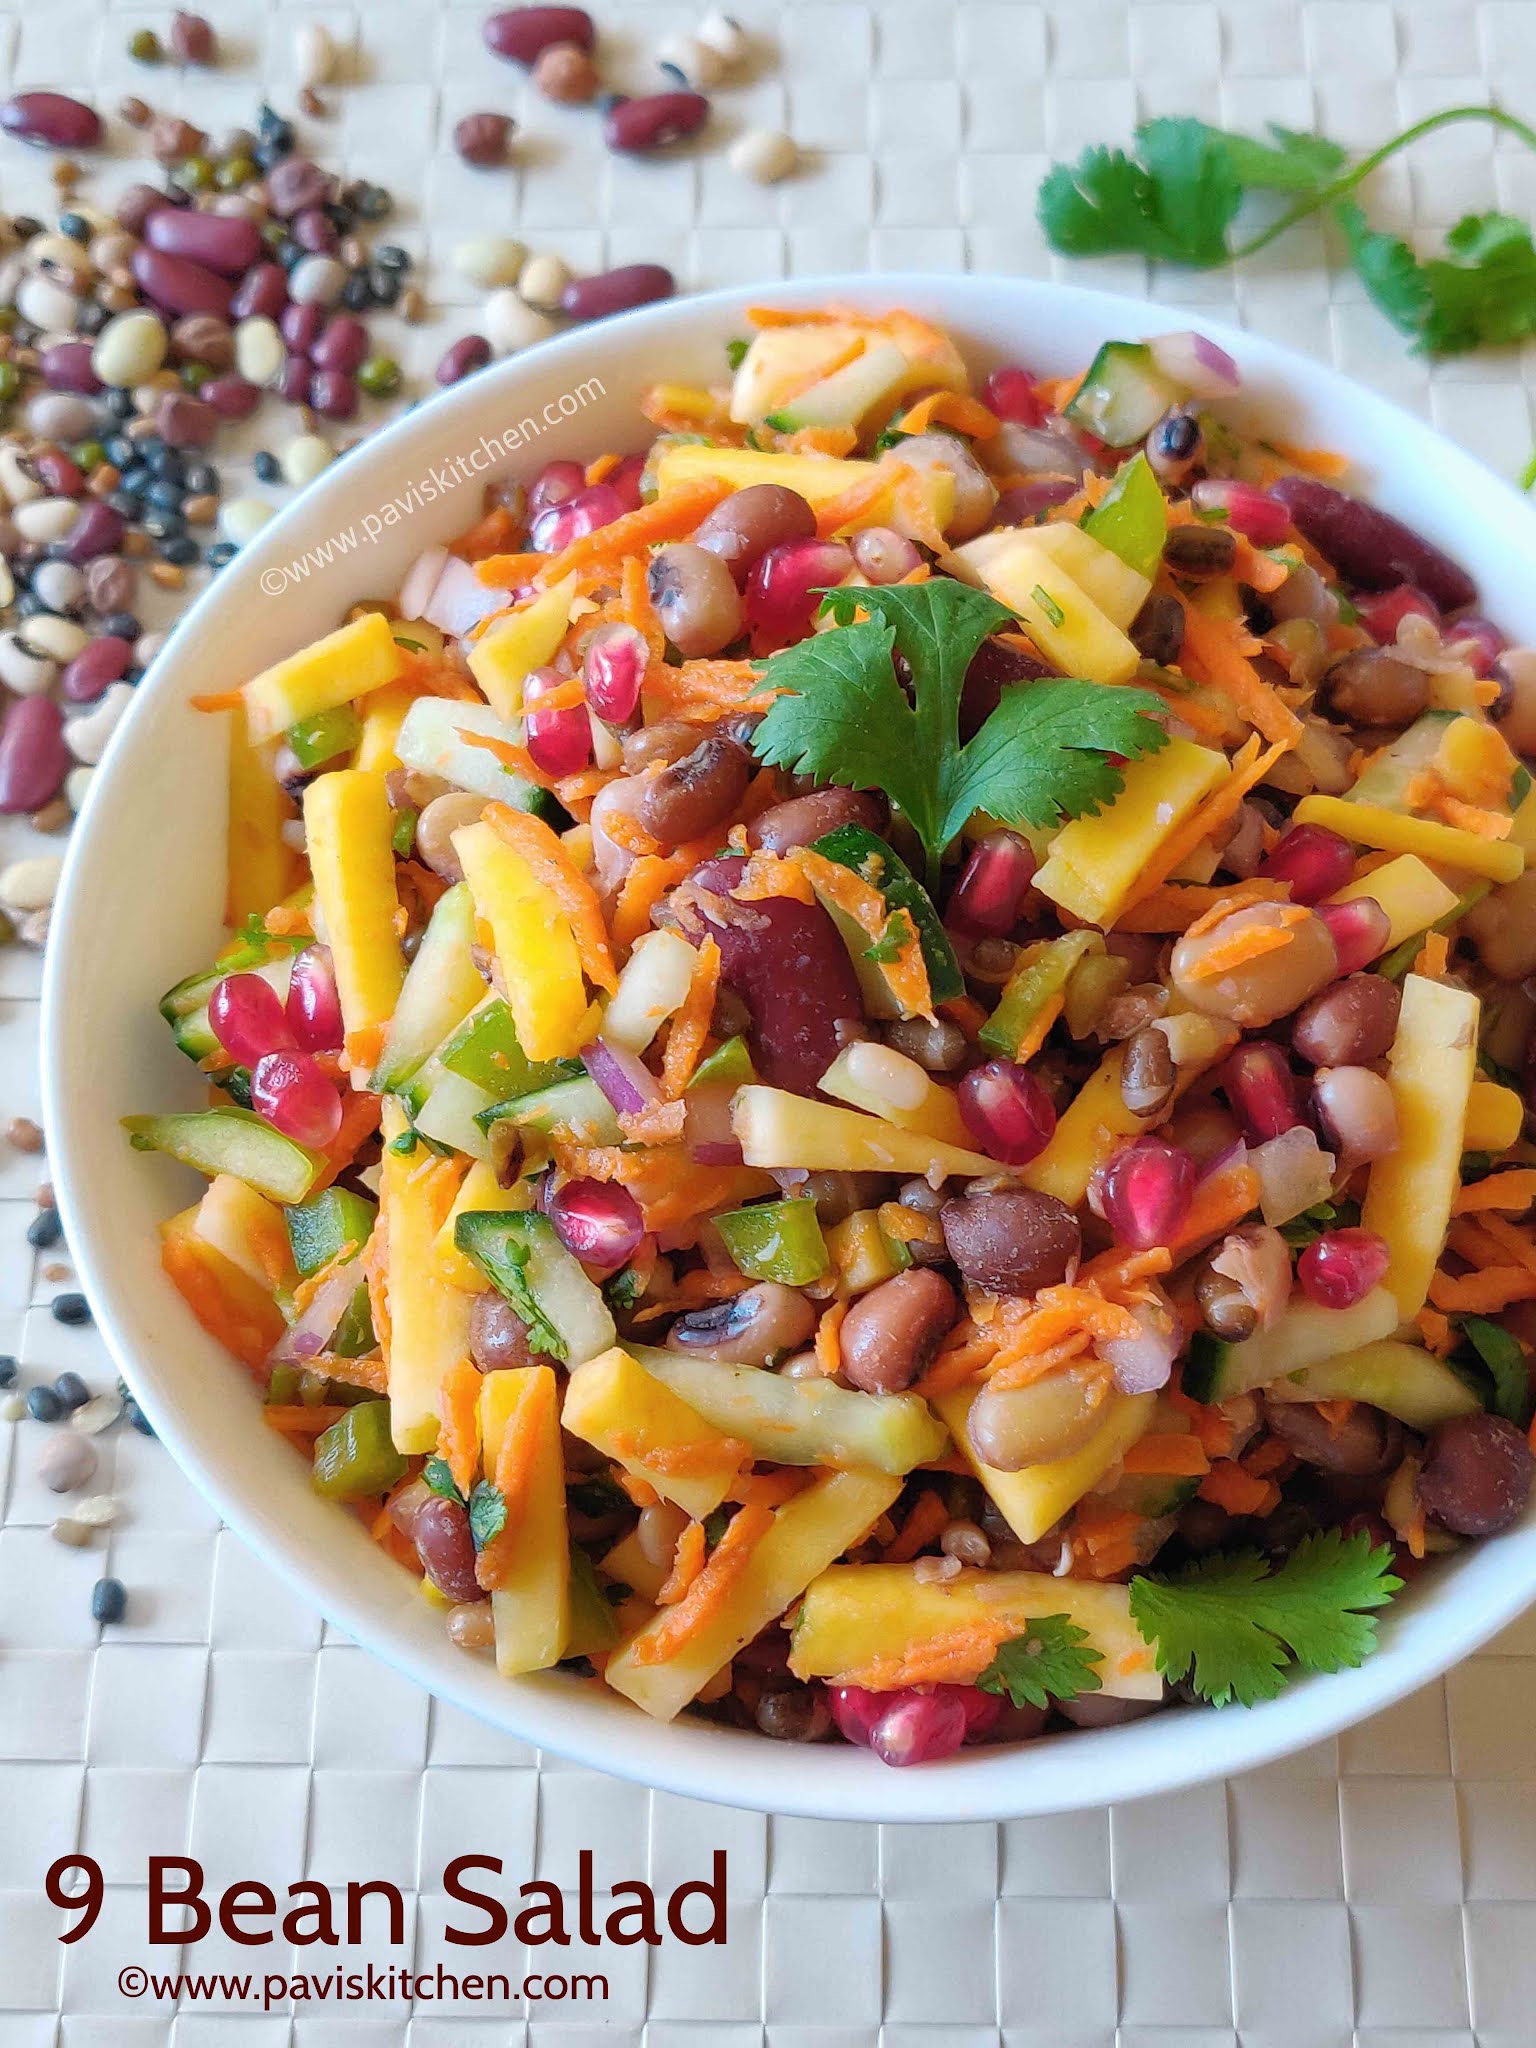 Mixed bean salad recipe | 9 bean salad | bean chaat recipe | navadhanya salad